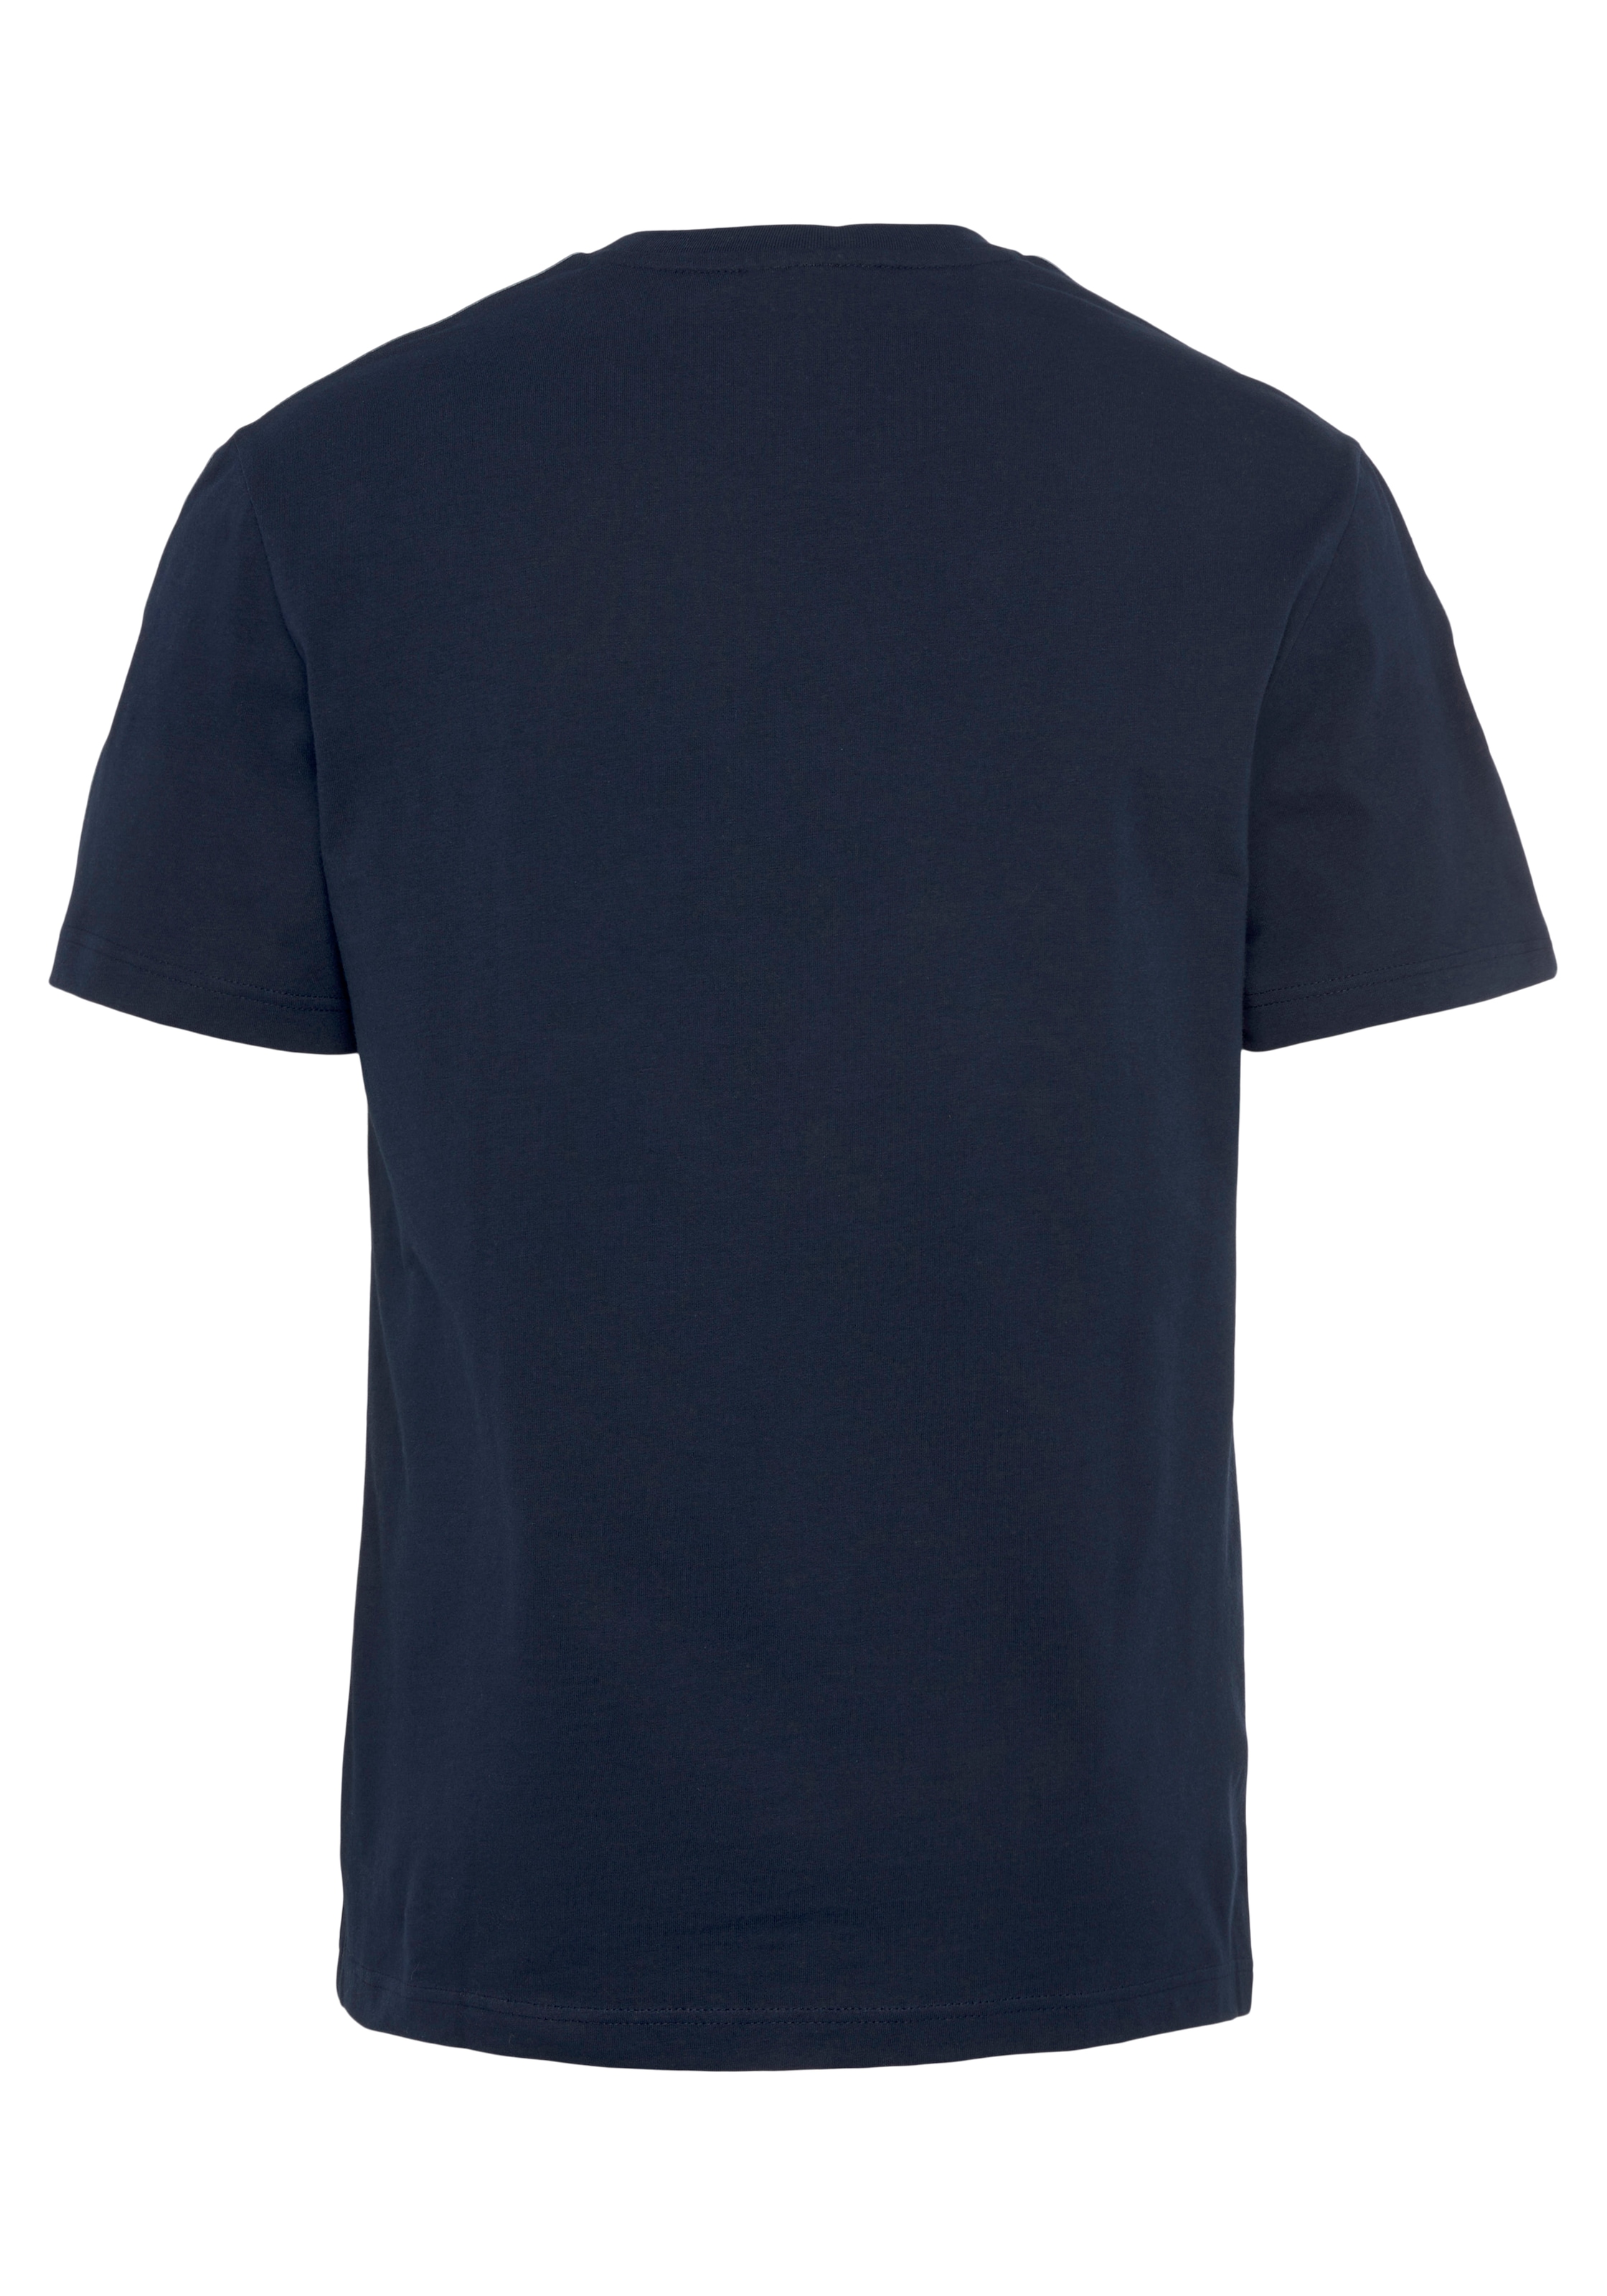 Lacoste T-Shirt, mit beschriftetem Kontrastband online bei OTTO bestellen an Schultern den